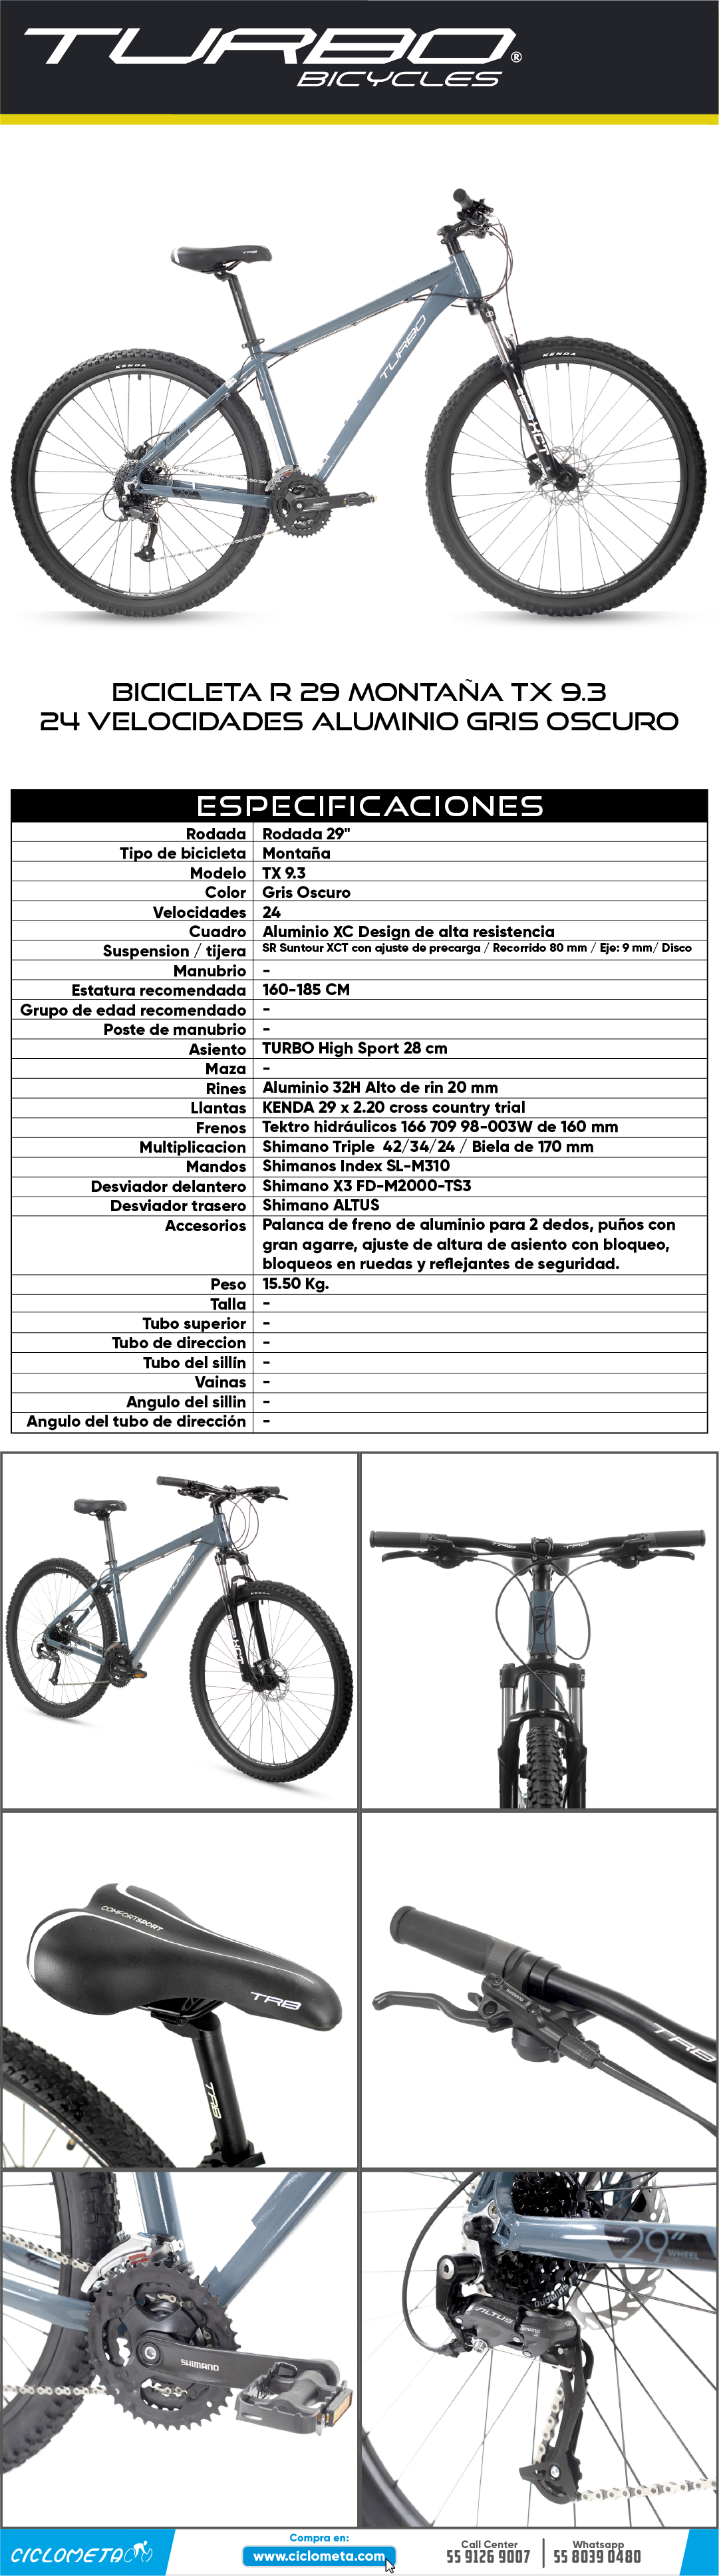 Ciclometa Detalles Bicicleta R 29 Montaña TX 9.3 Terra Talla L Turbo